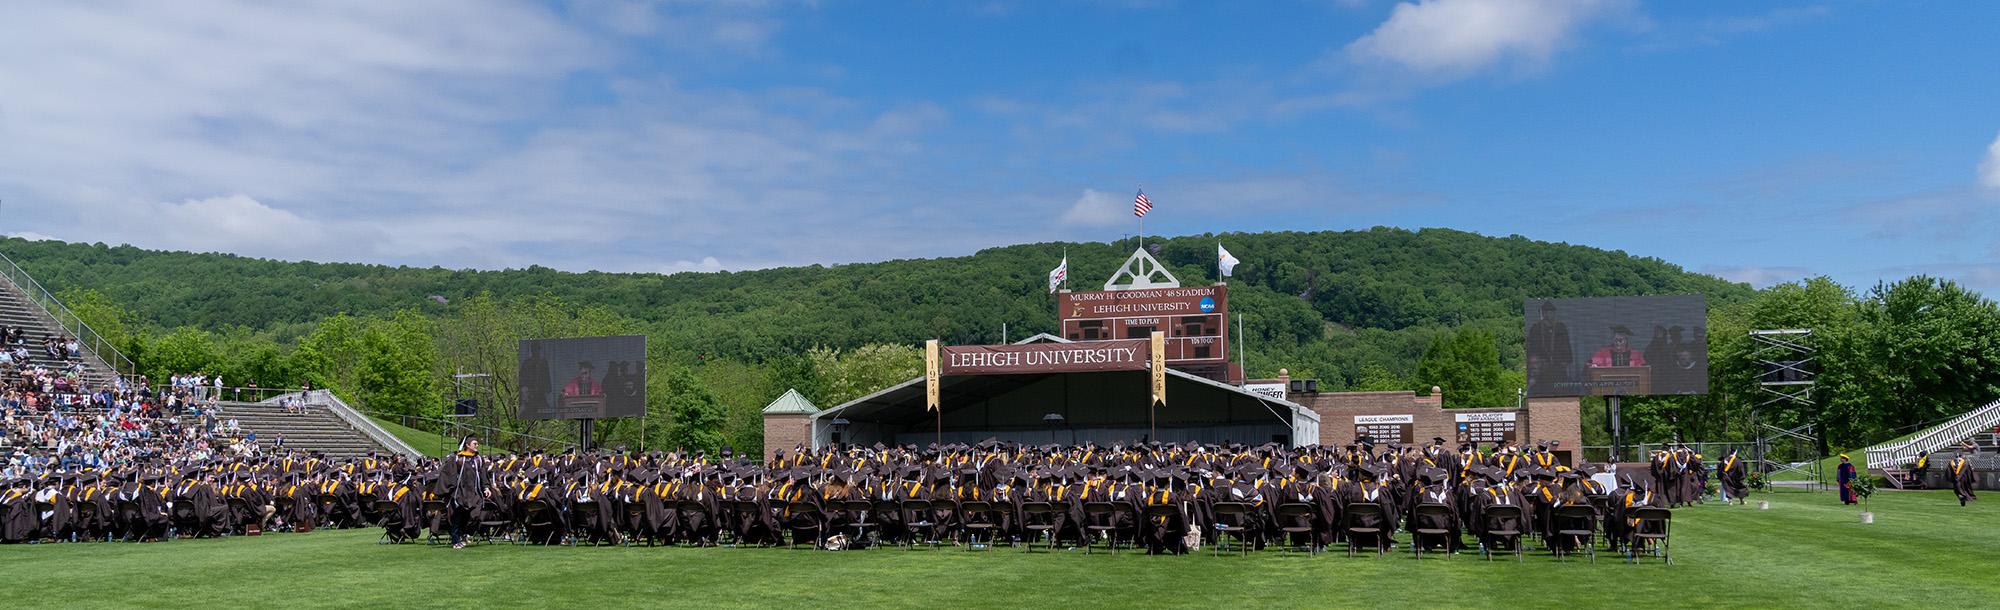 Panoramic Shot of Lehigh University Commencement